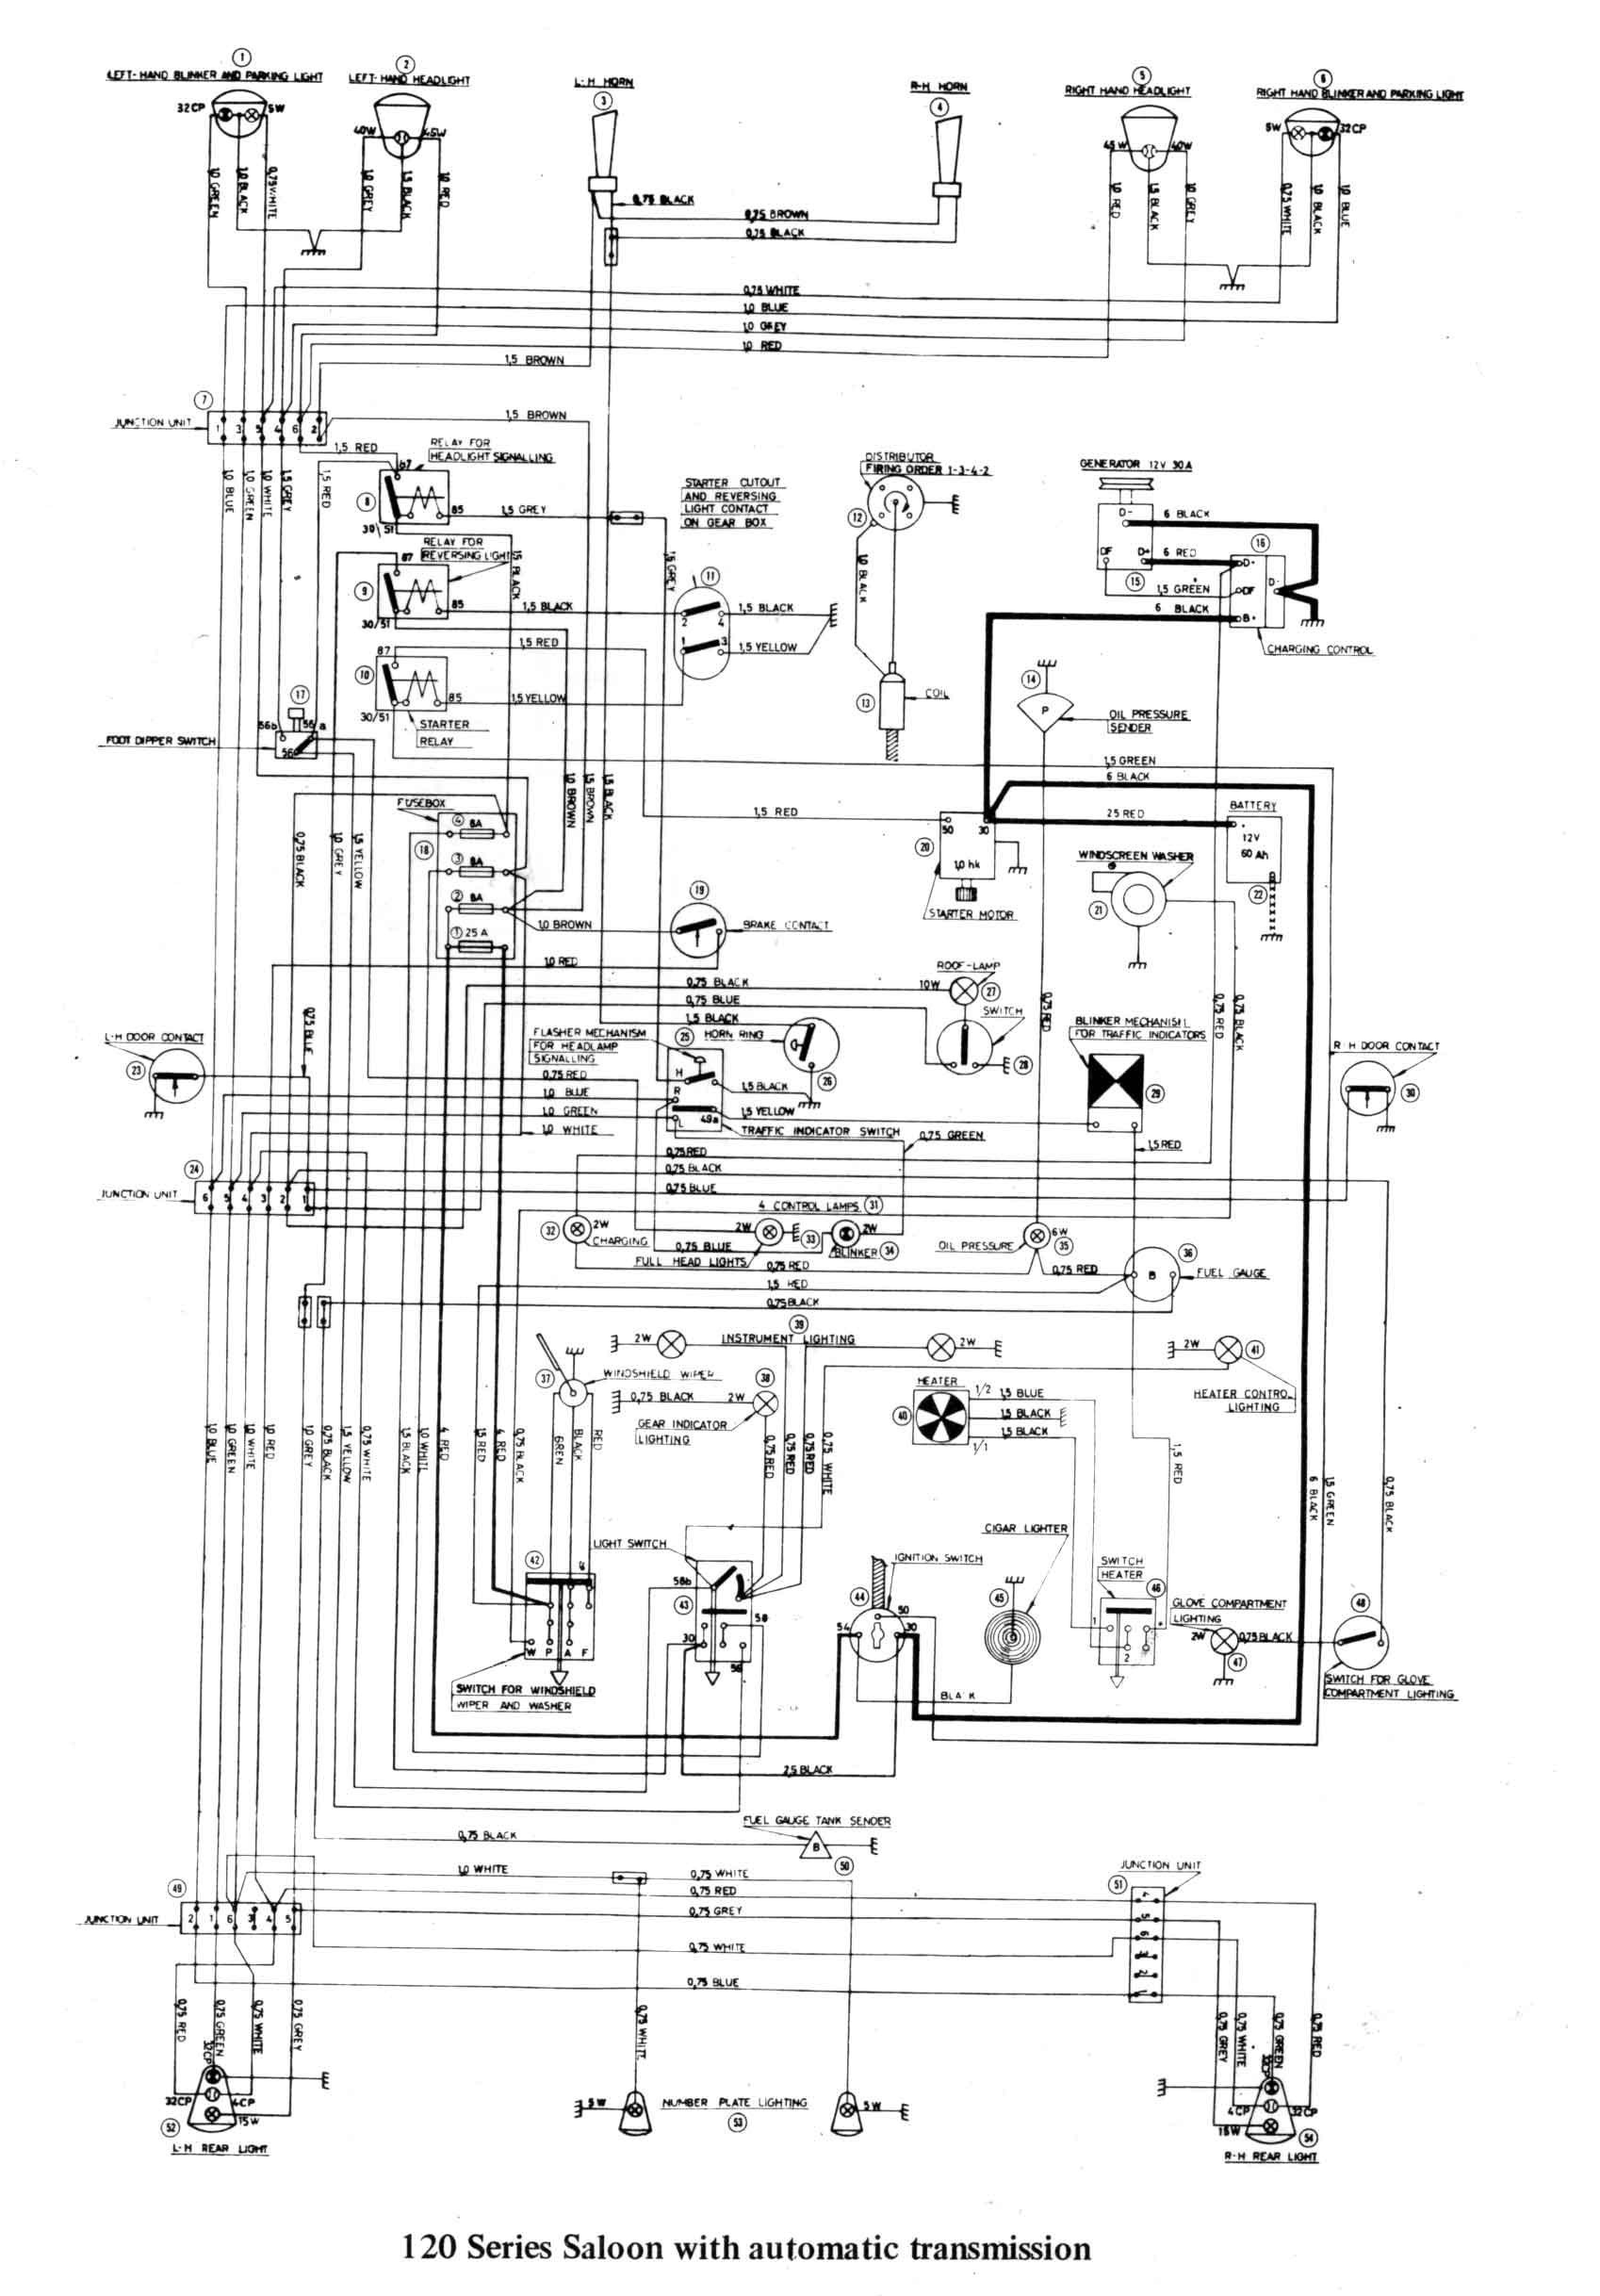 Car Relay Wiring Diagram Volvo Wiring Diagram Wiring Schematic Diagram Of Car Relay Wiring Diagram